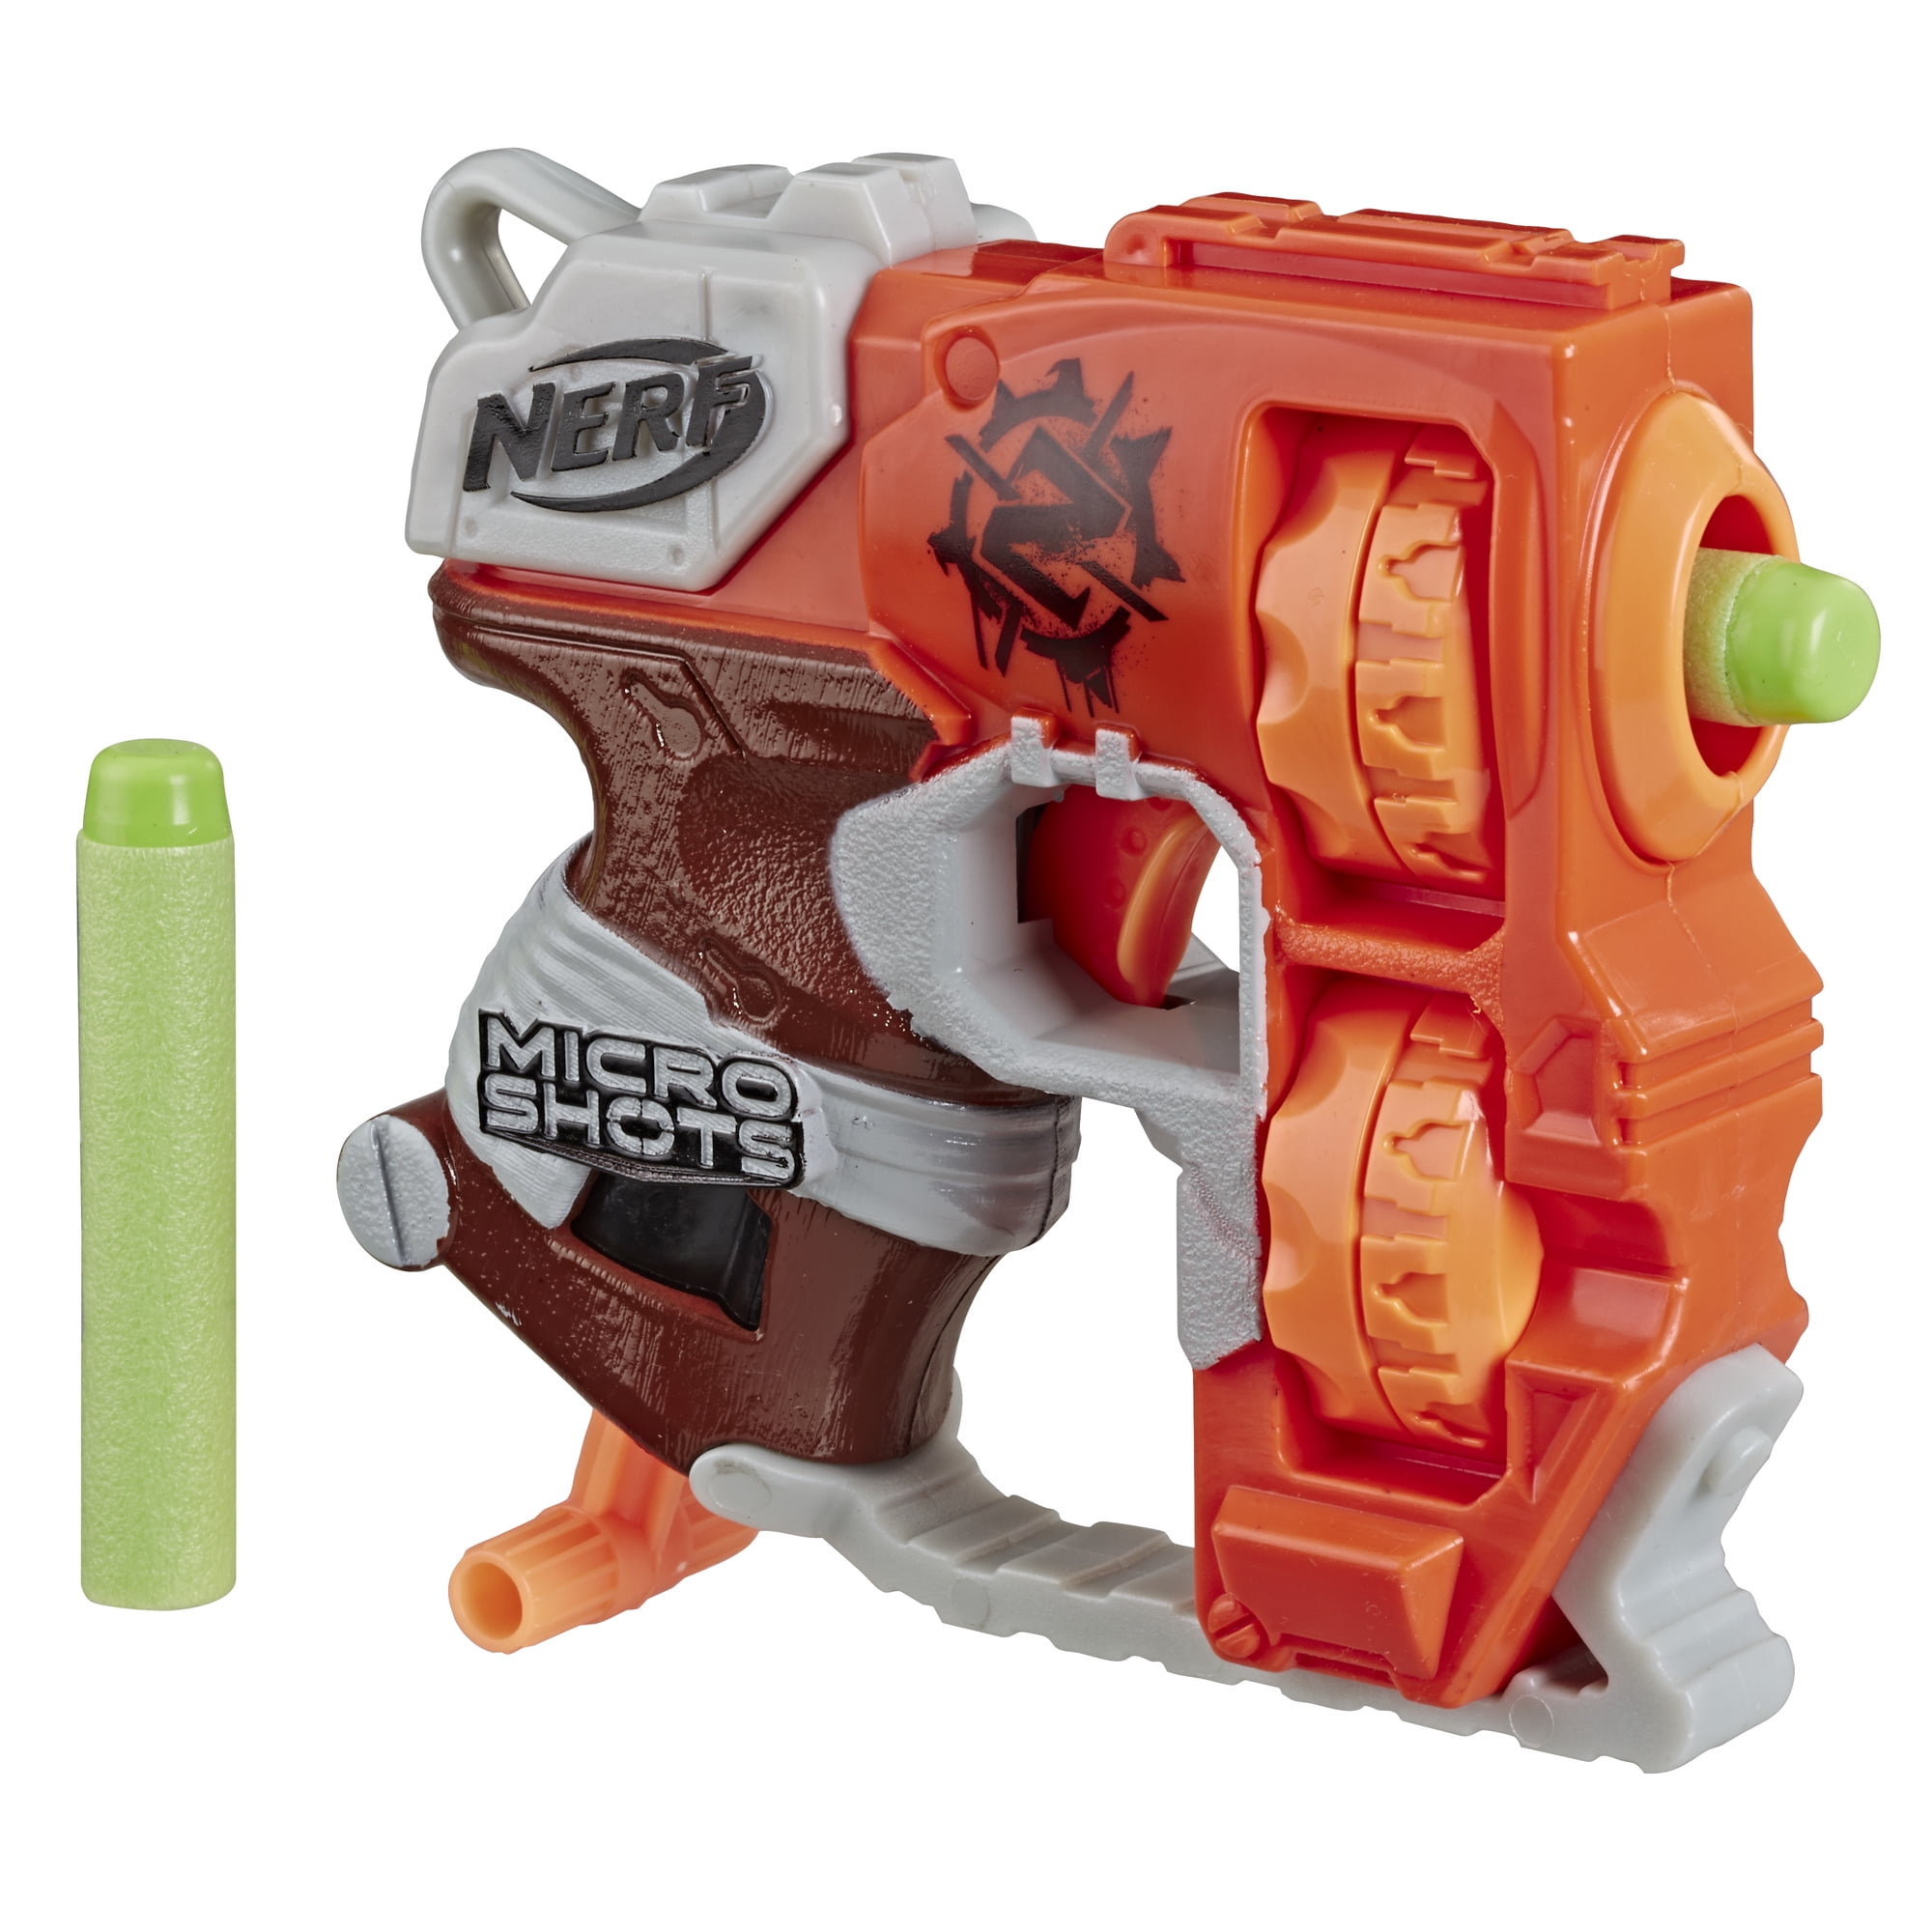 Nerf Zombie Strike Flipfury Blaster for sale online A9603 